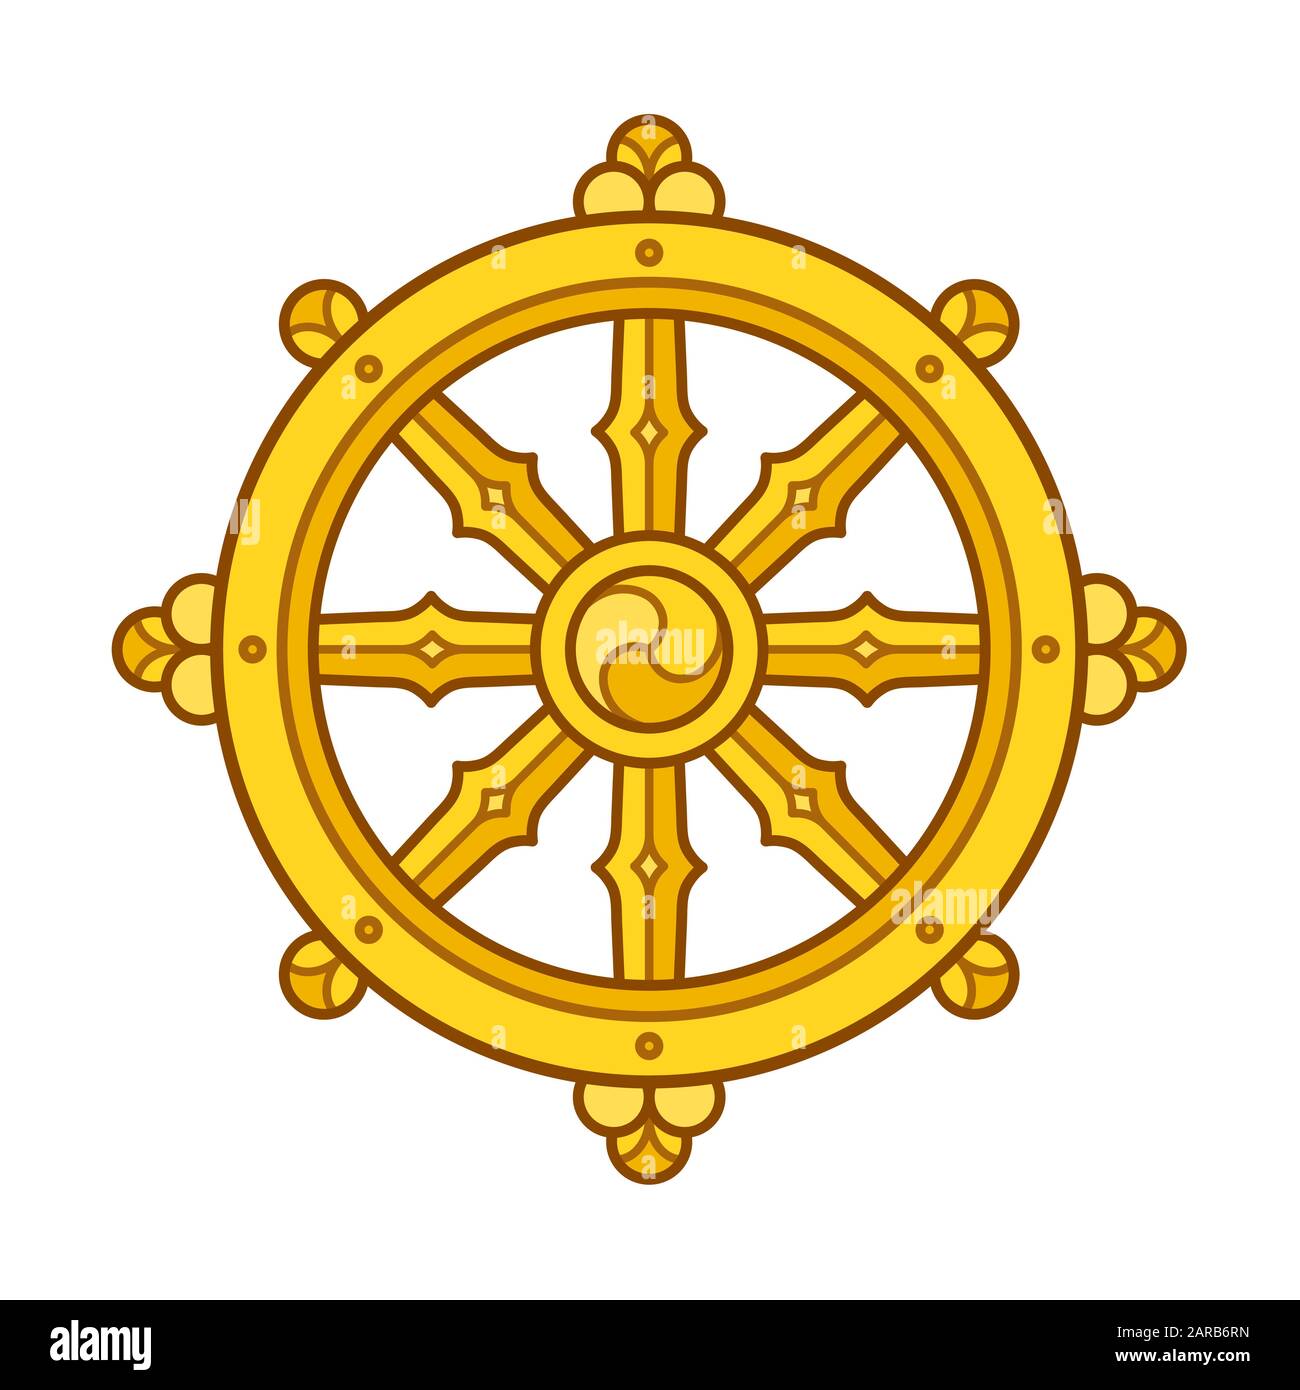 Dharmachakra (Dharma Wheel) symbol in Buddhism. Golden wheel sign art. Isolated vector illustration. Stock Vector